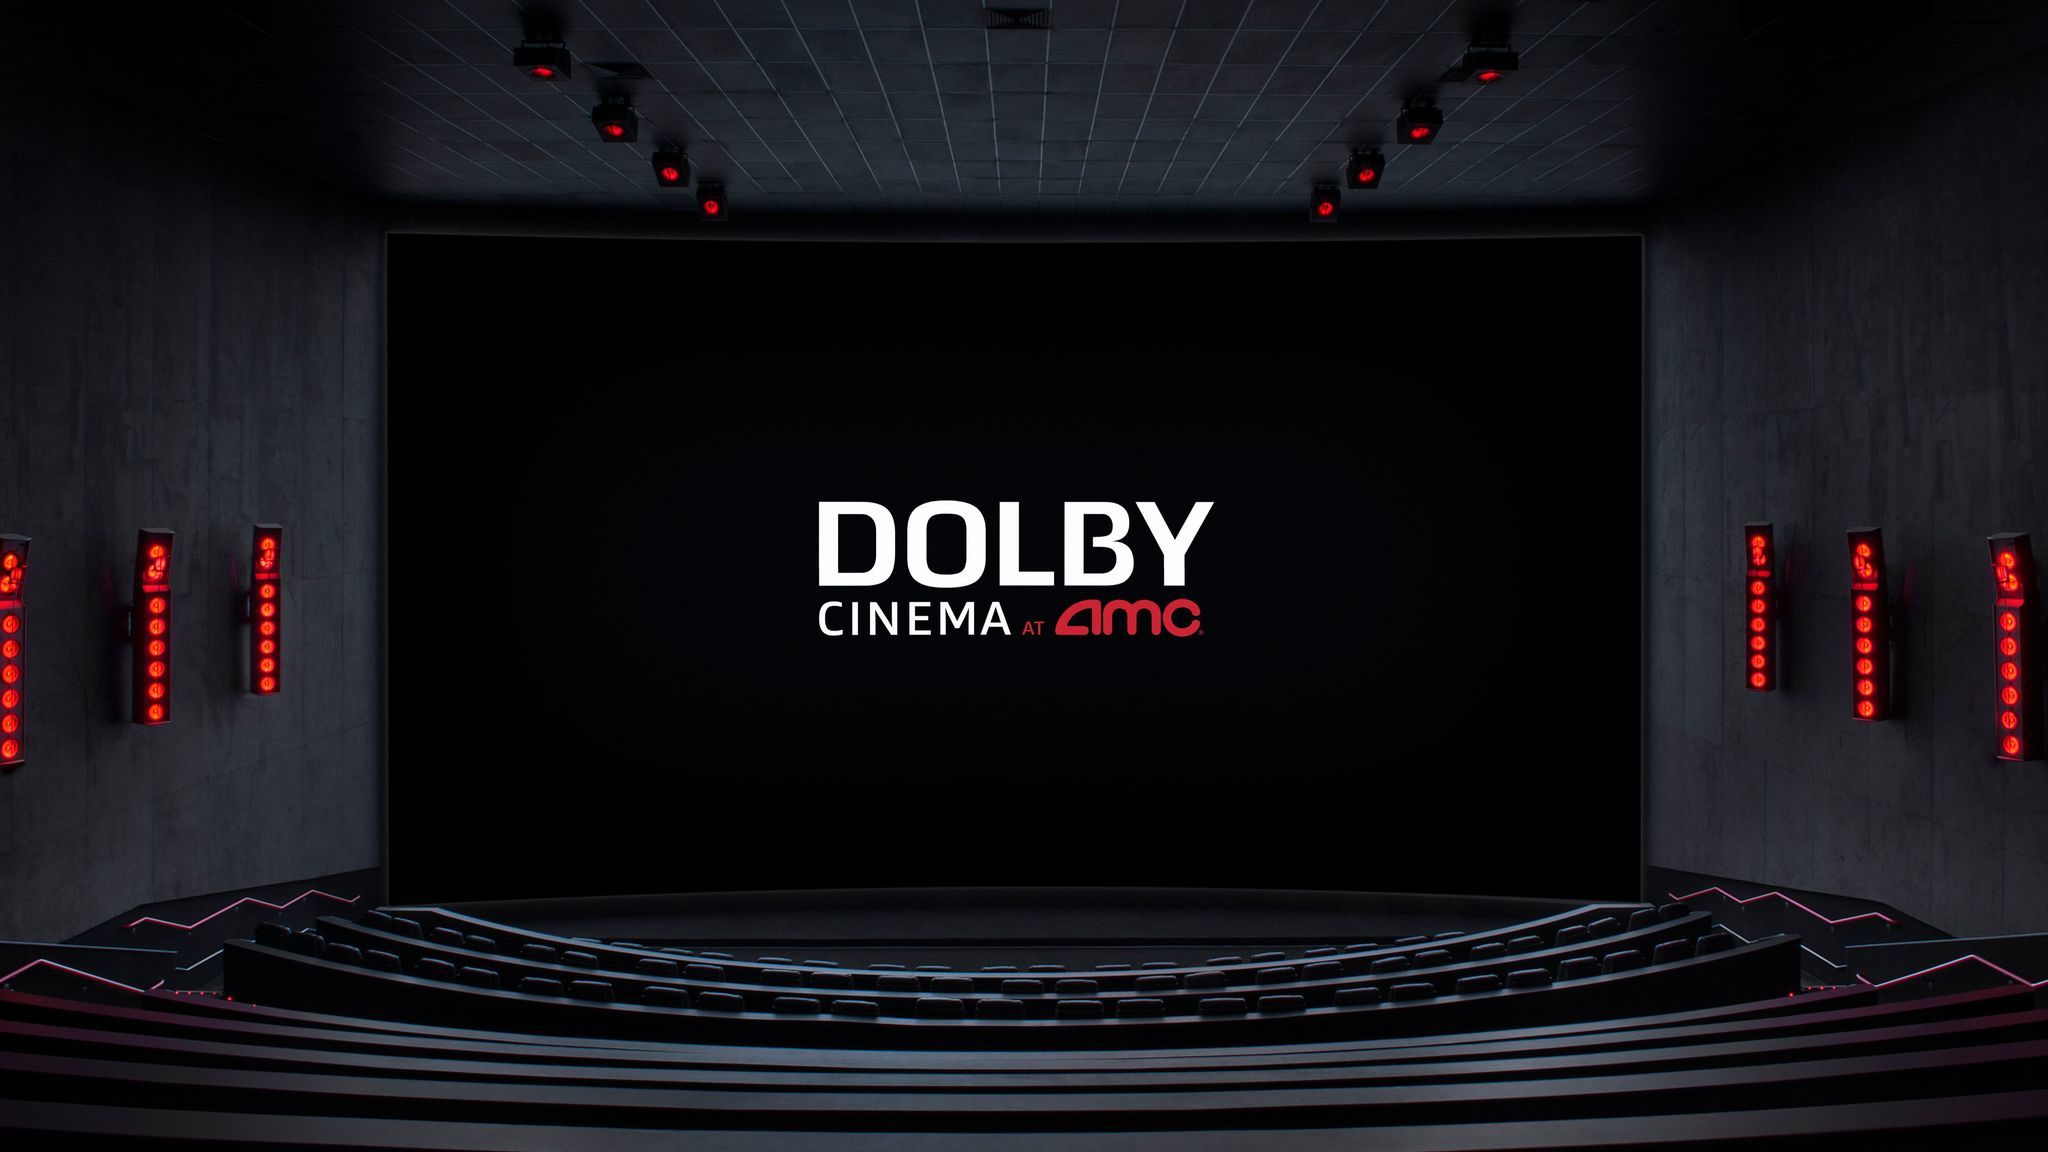 The Dolby Cinema at AMC in Burbank